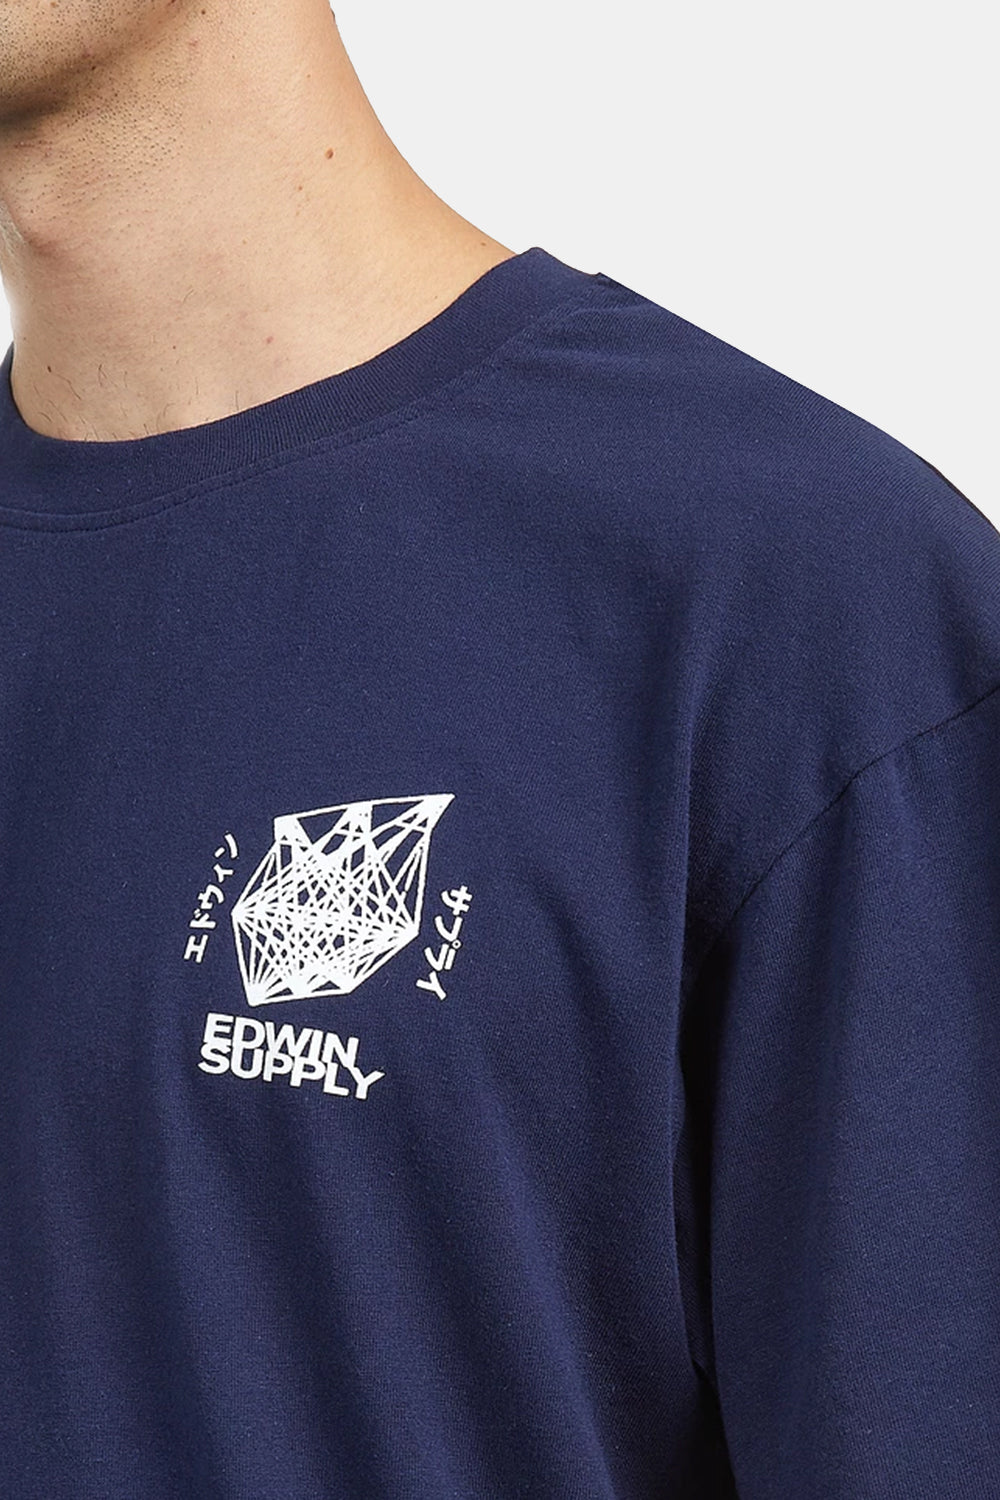 Edwin Protect Ya Lungs T-Shirt (Maritime)